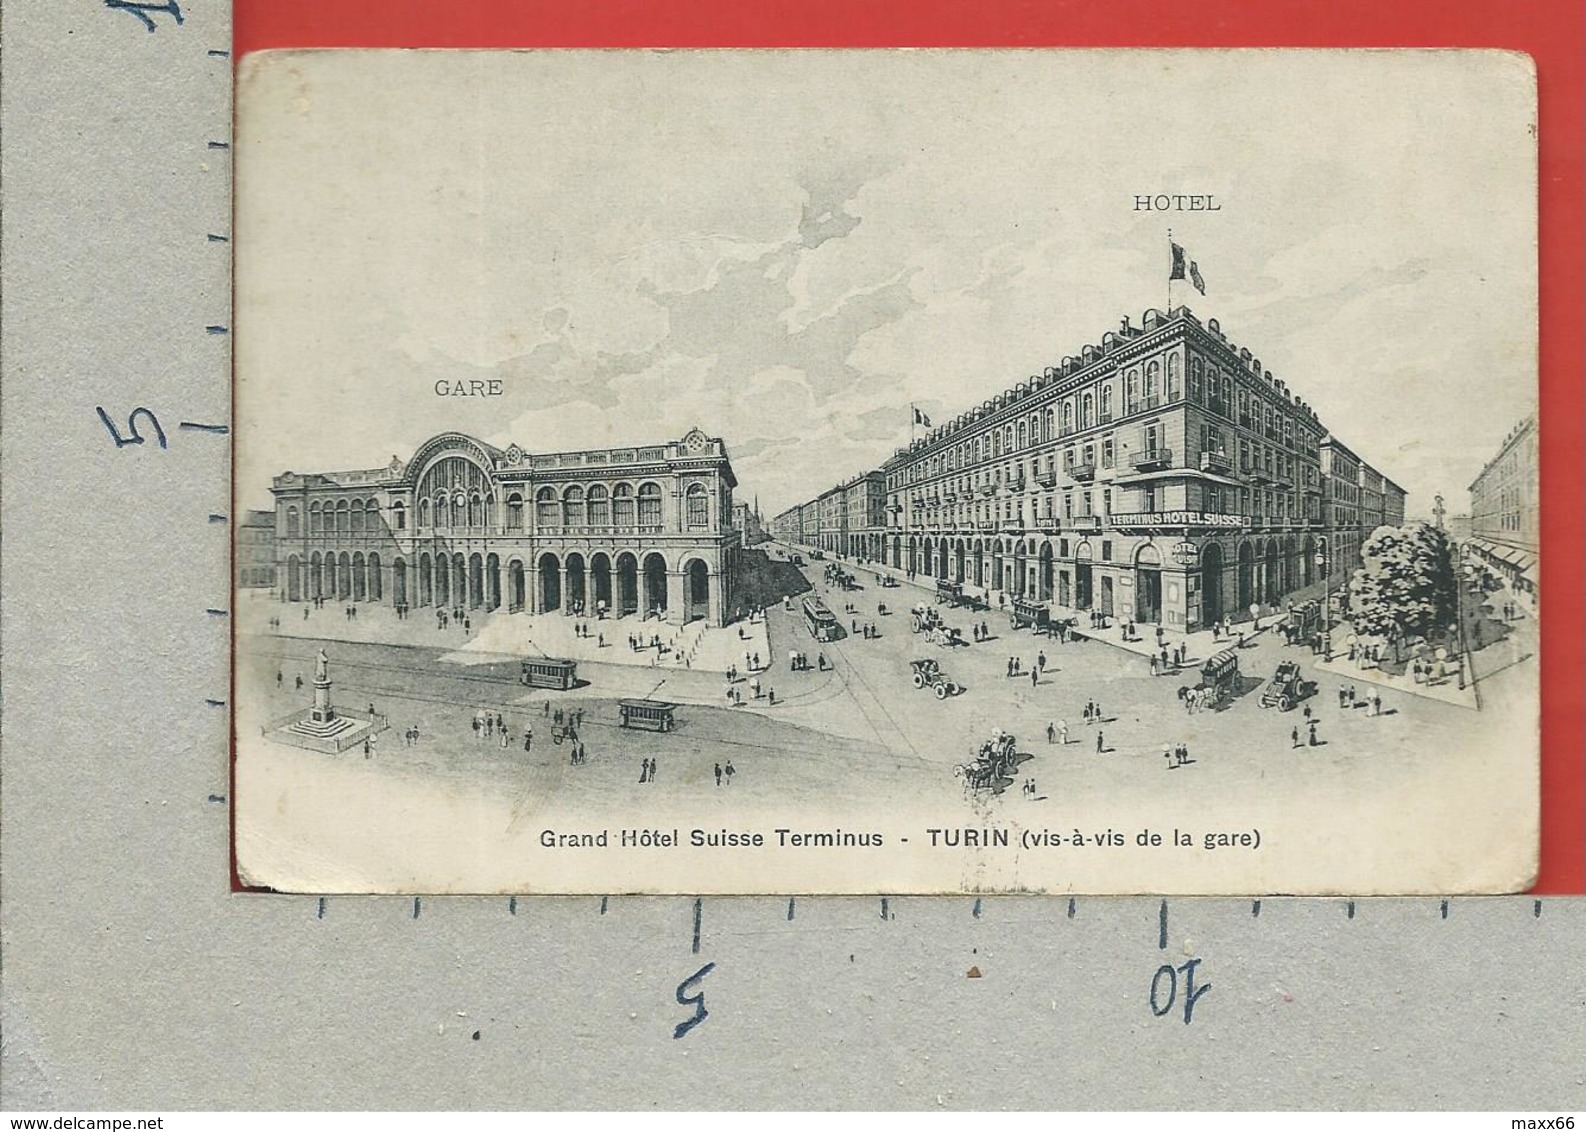 CARTOLINA VG ITALIA - Grand Hotel Suisse Terminus - TORINO TURIN - Vis A Vis De La Gare - 9 X 14 - 1911 - Bares, Hoteles Y Restaurantes